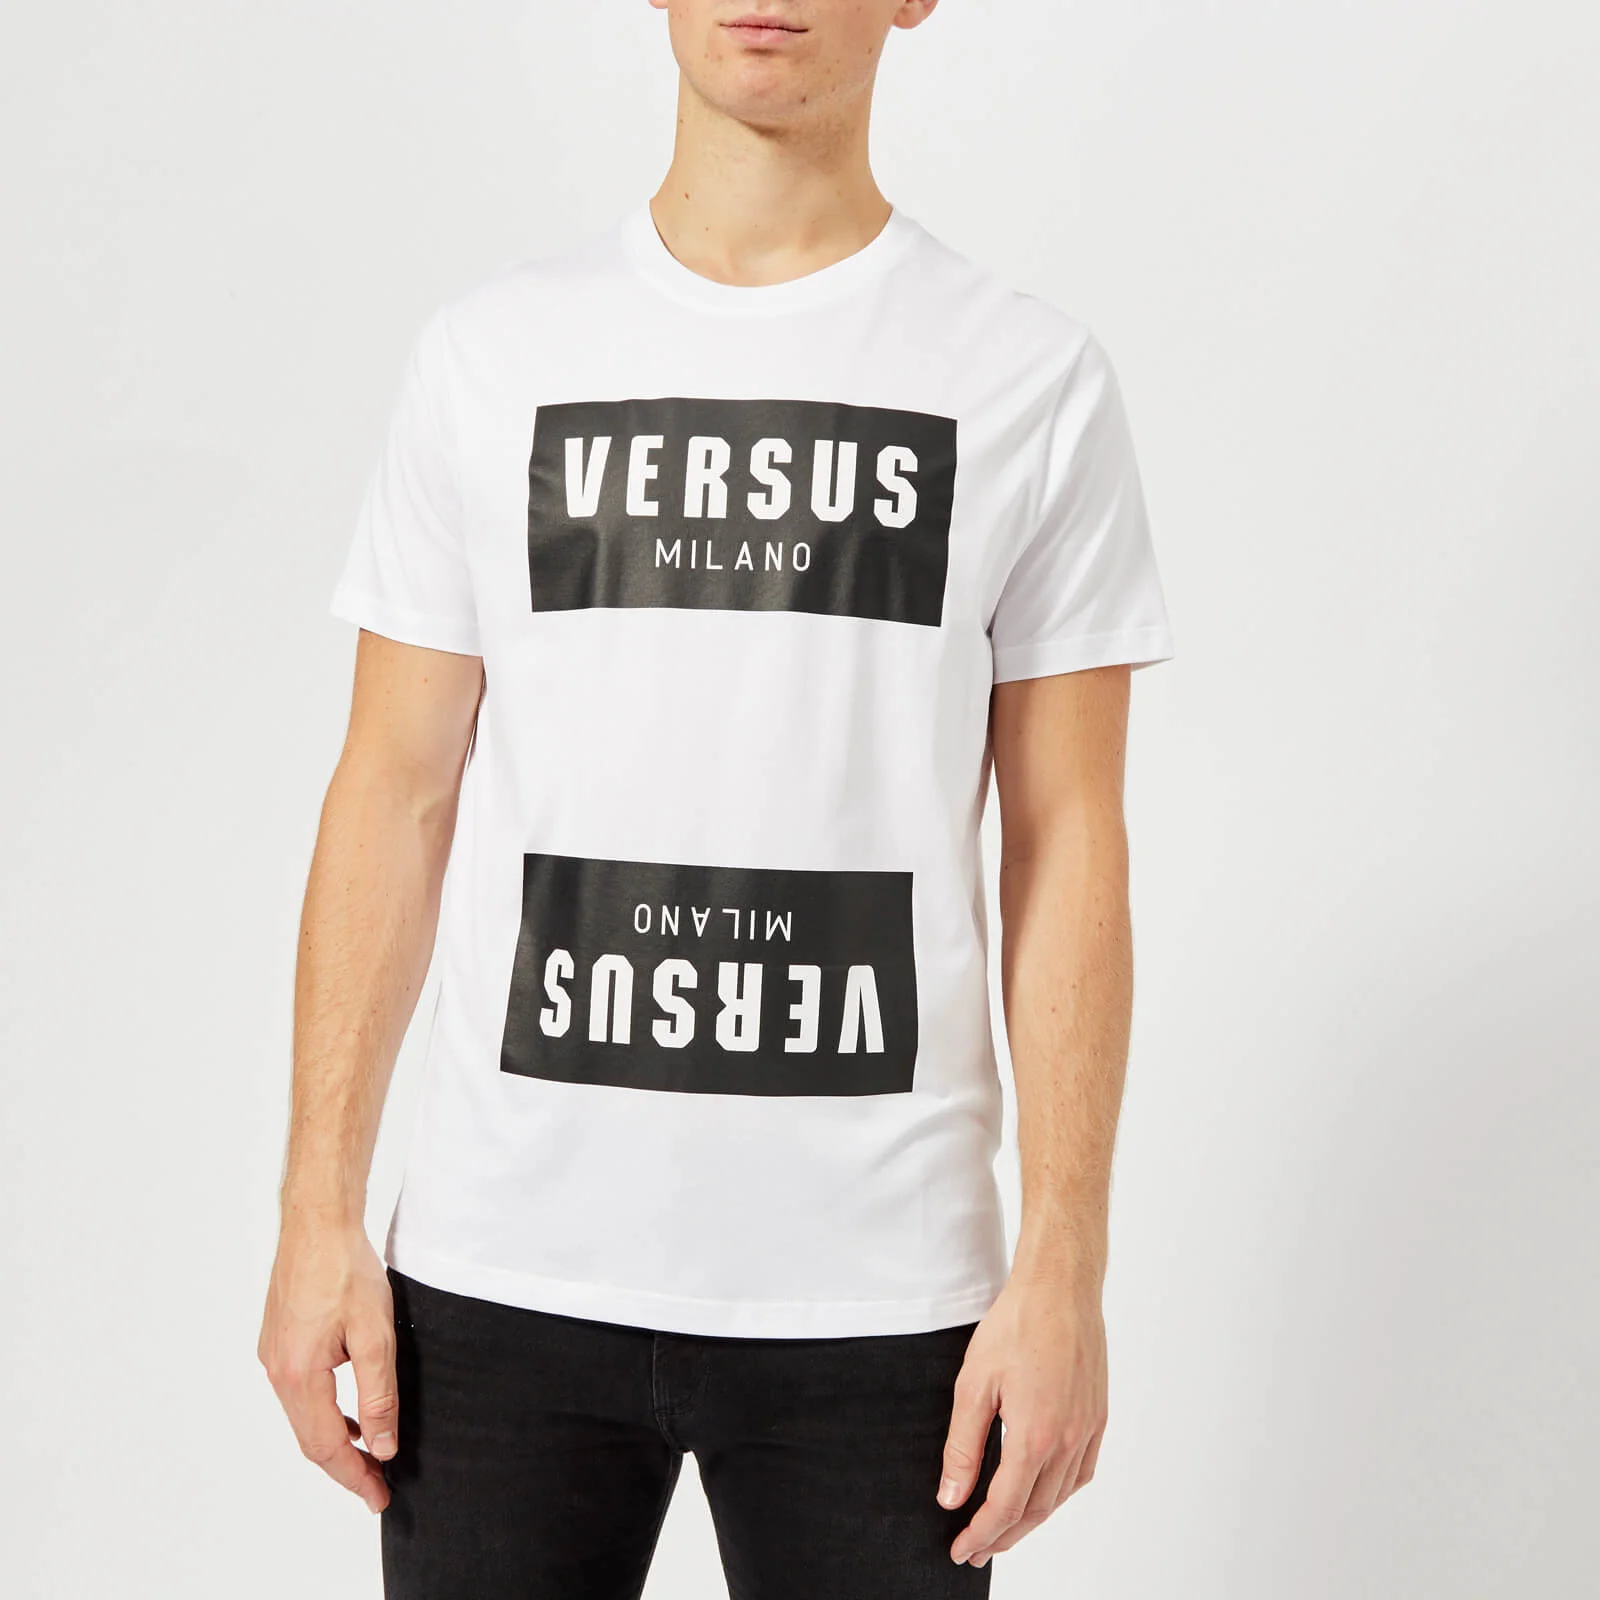 Versus Versace Men's Versus Logo T-Shirt - White Image 1